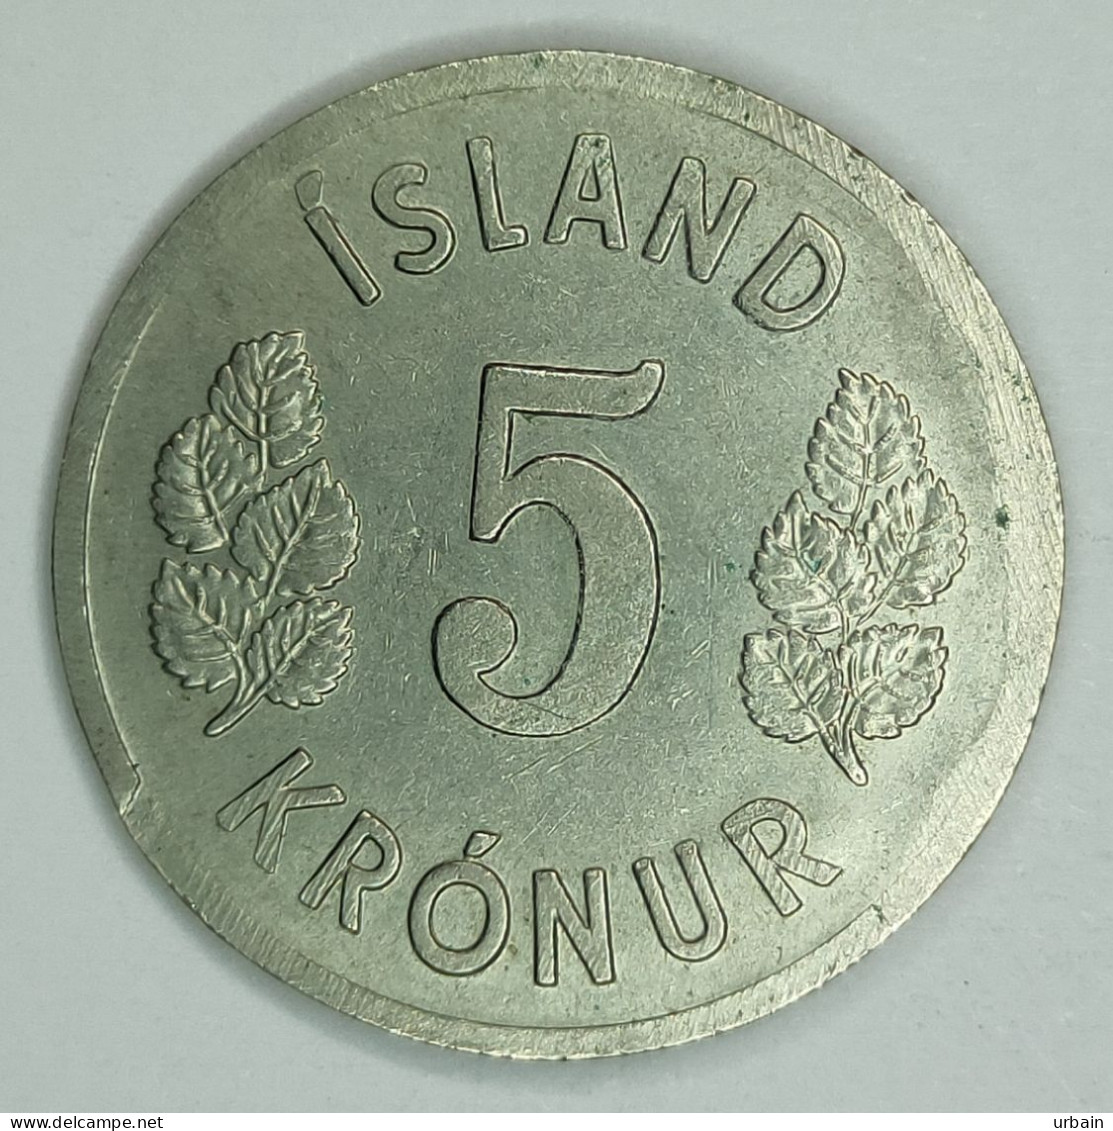 2x Coins - ICELAND - Republic Of Iceland (1944 - 1980) - Islandia